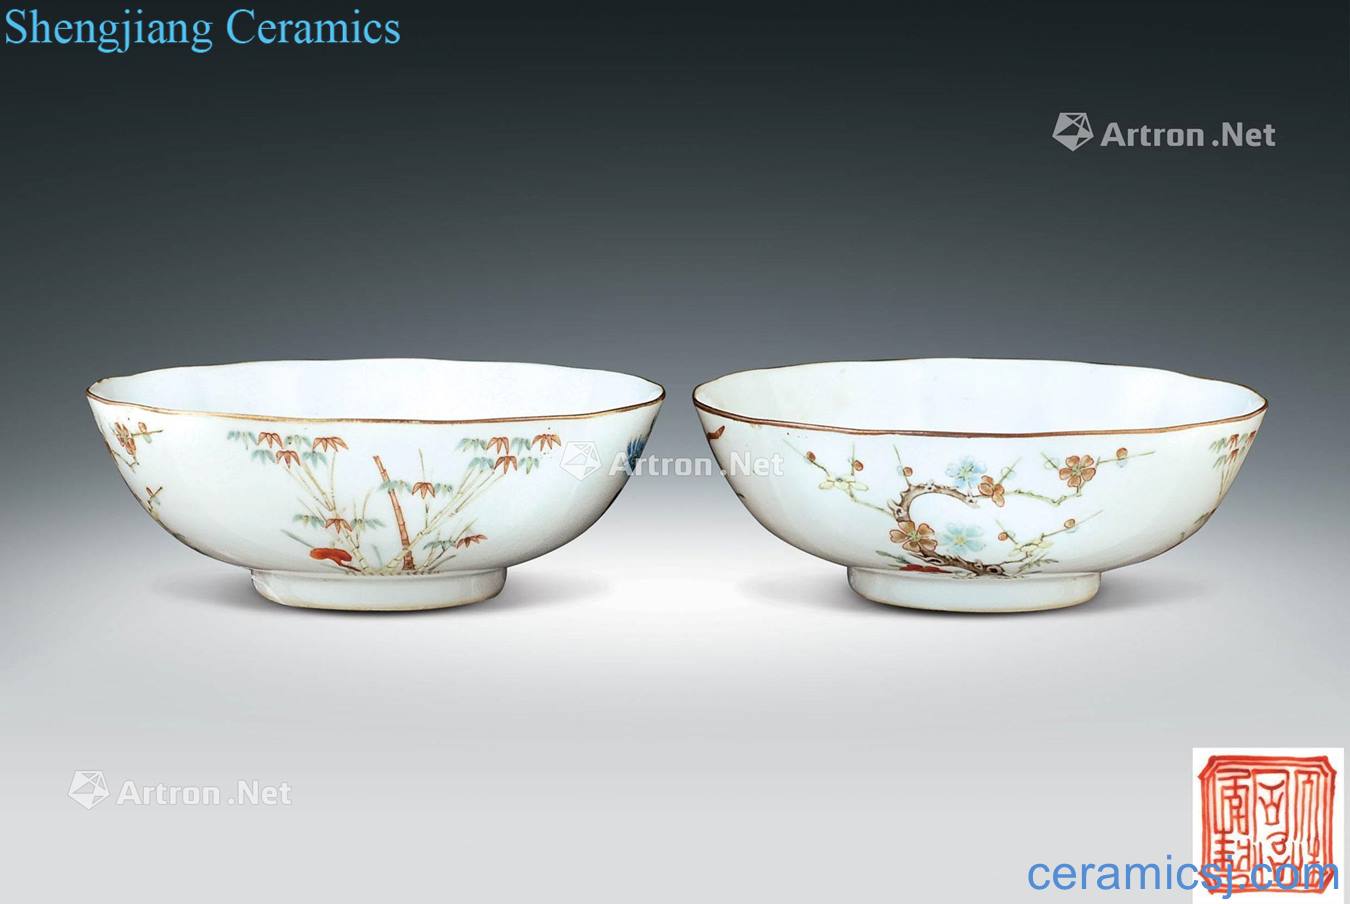 Dajing pastel four seasons flower grain flower mouth bowl (a)